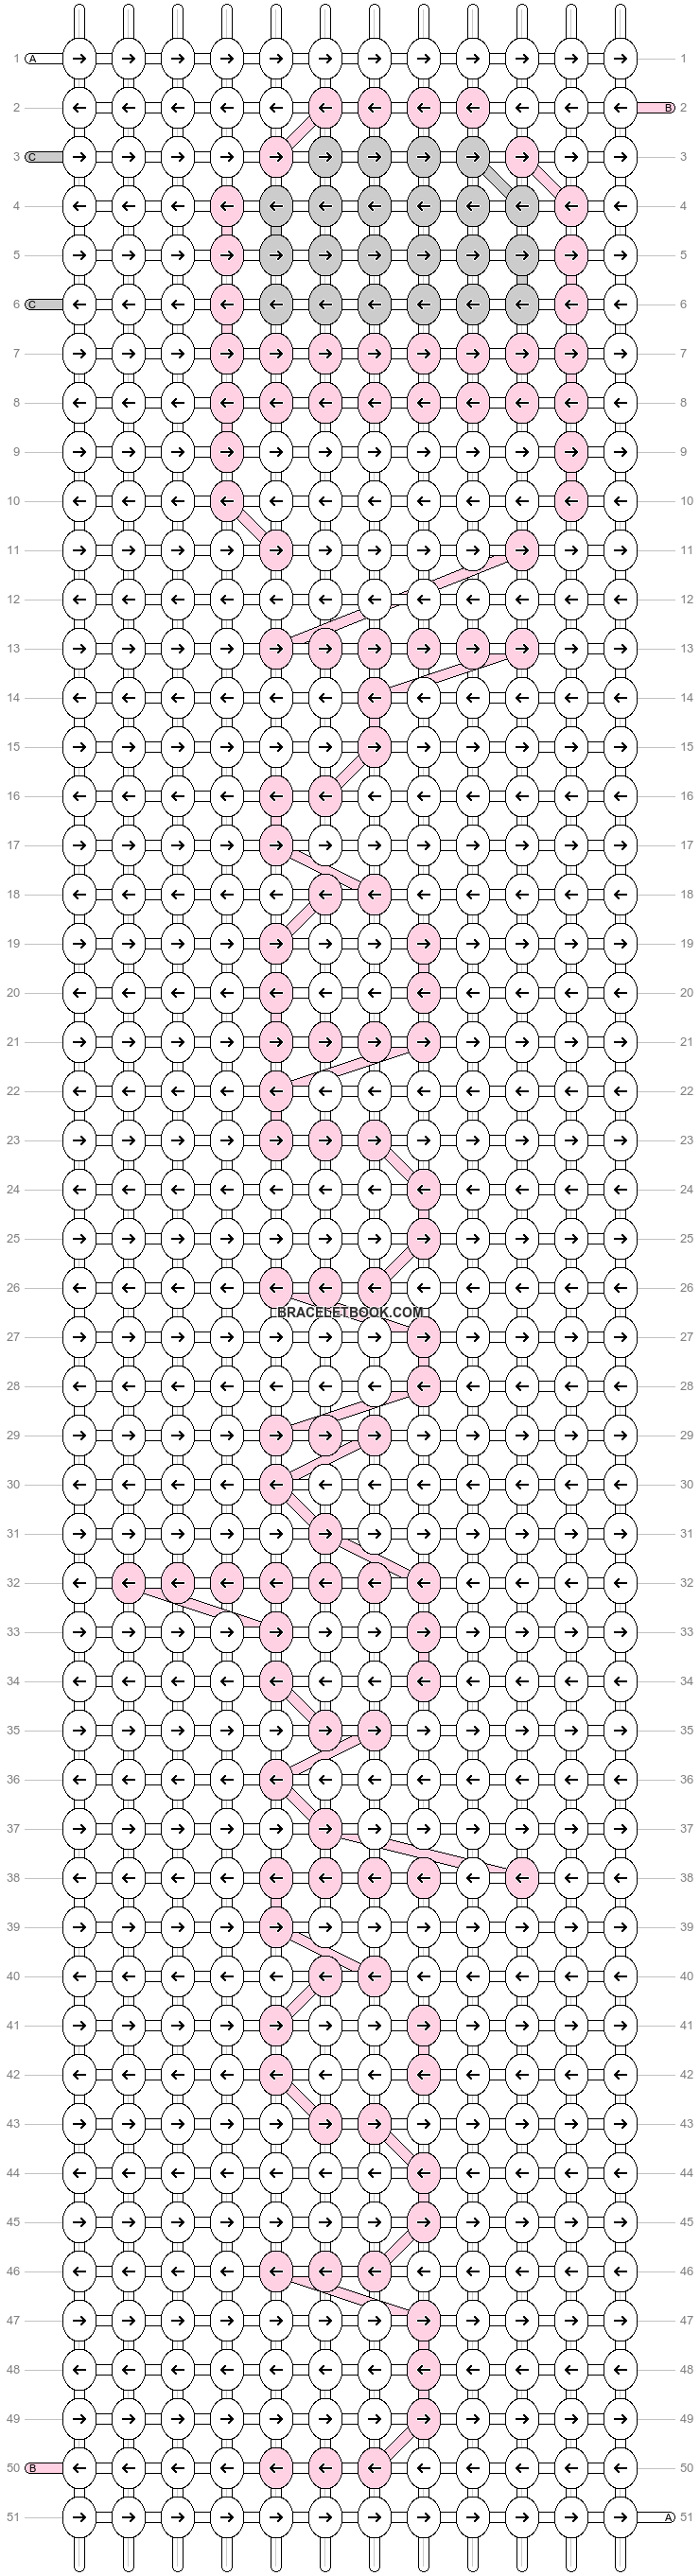 Alpha pattern #57271 variation #101530 pattern